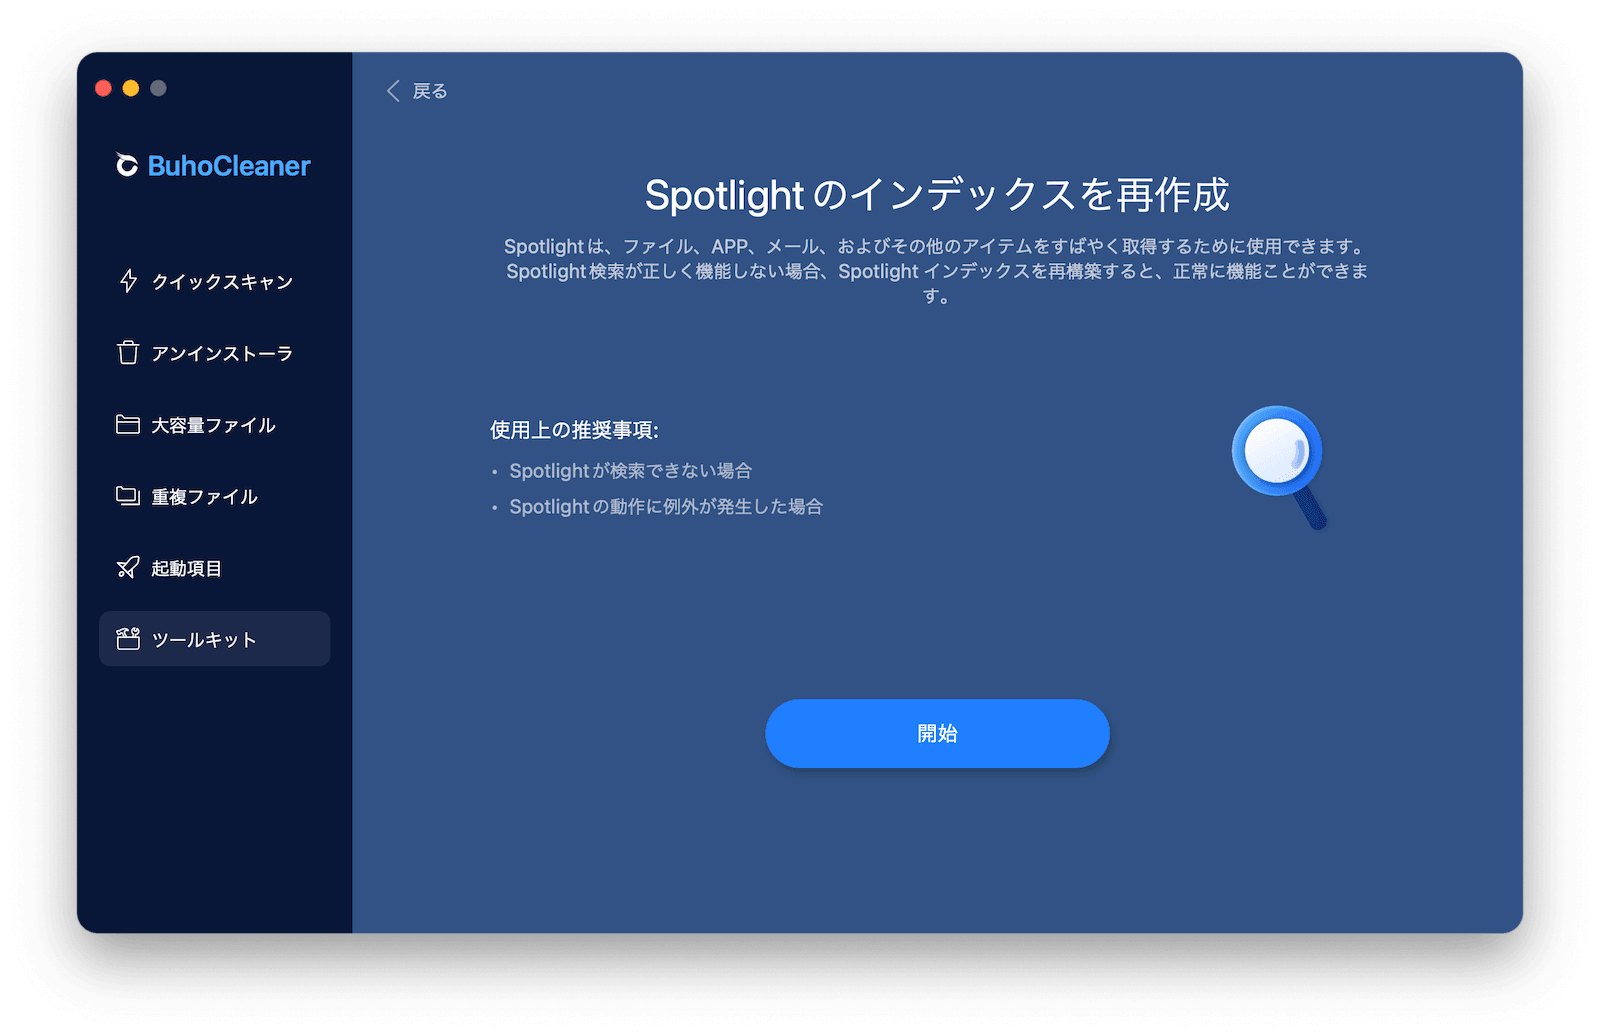 reindex-spotlight-buhocleaner-jp